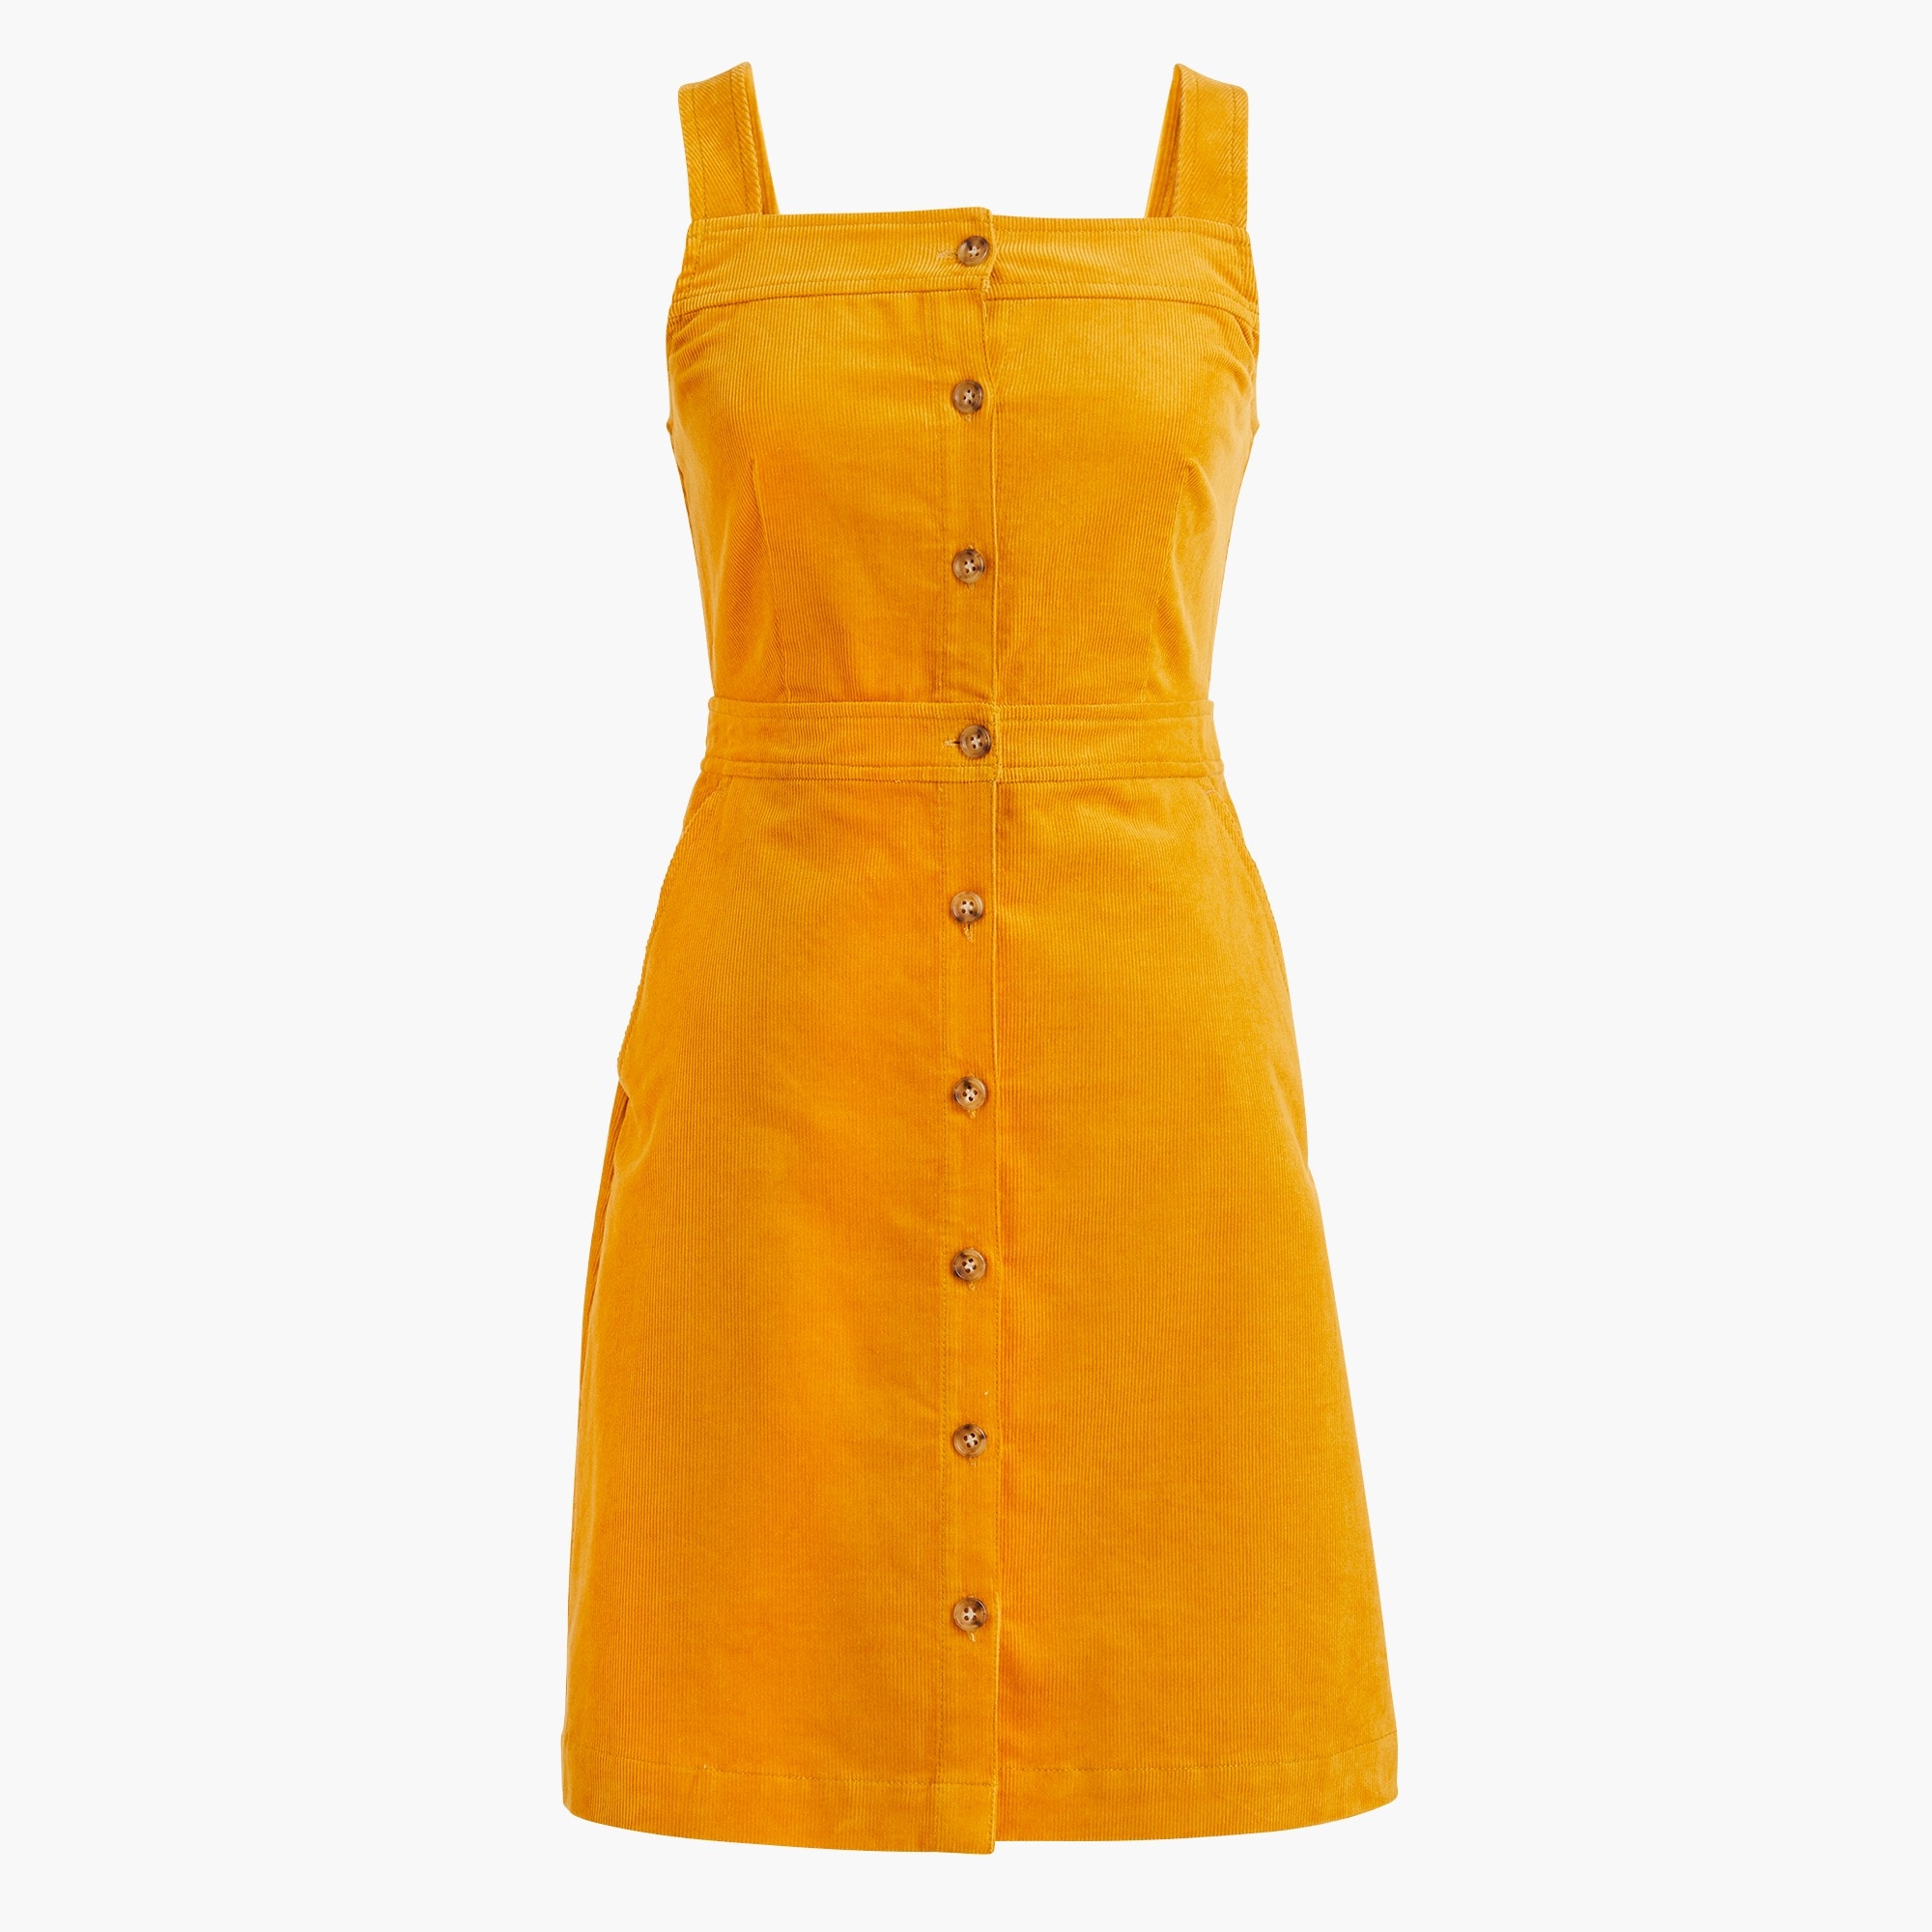 yellow orange dress